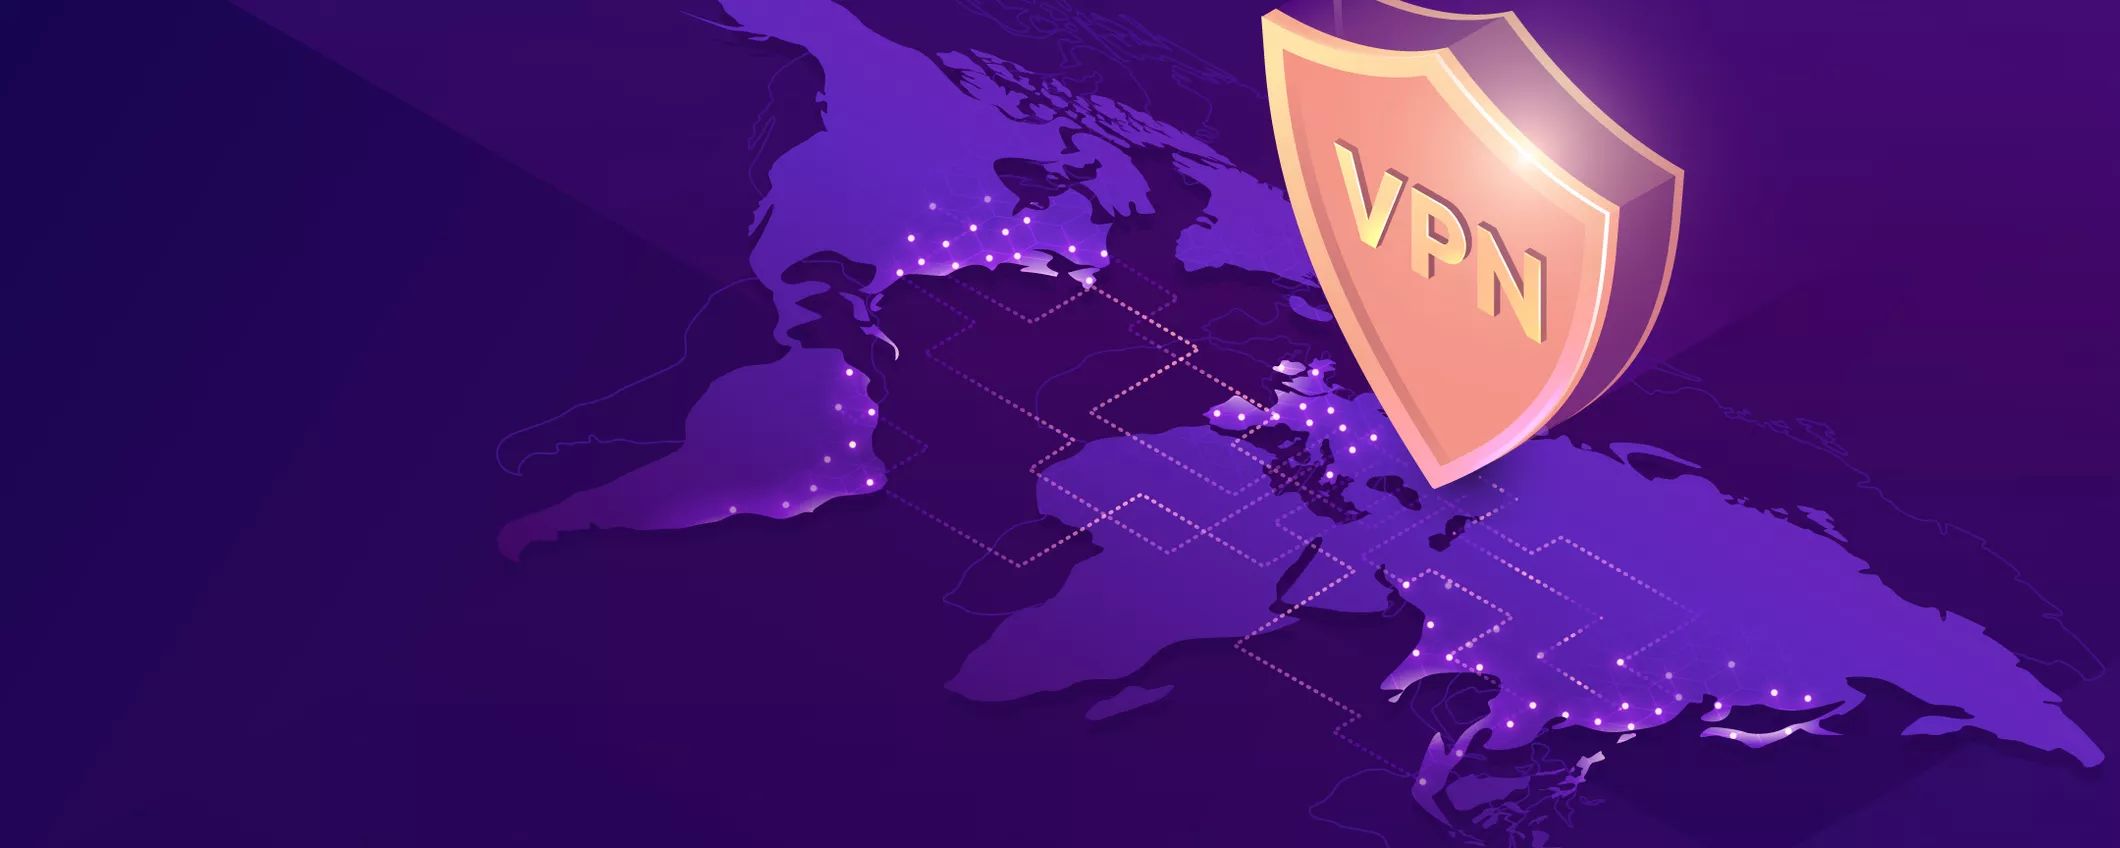 CyberGhost: VPN no-log a meno di 2€ al mese